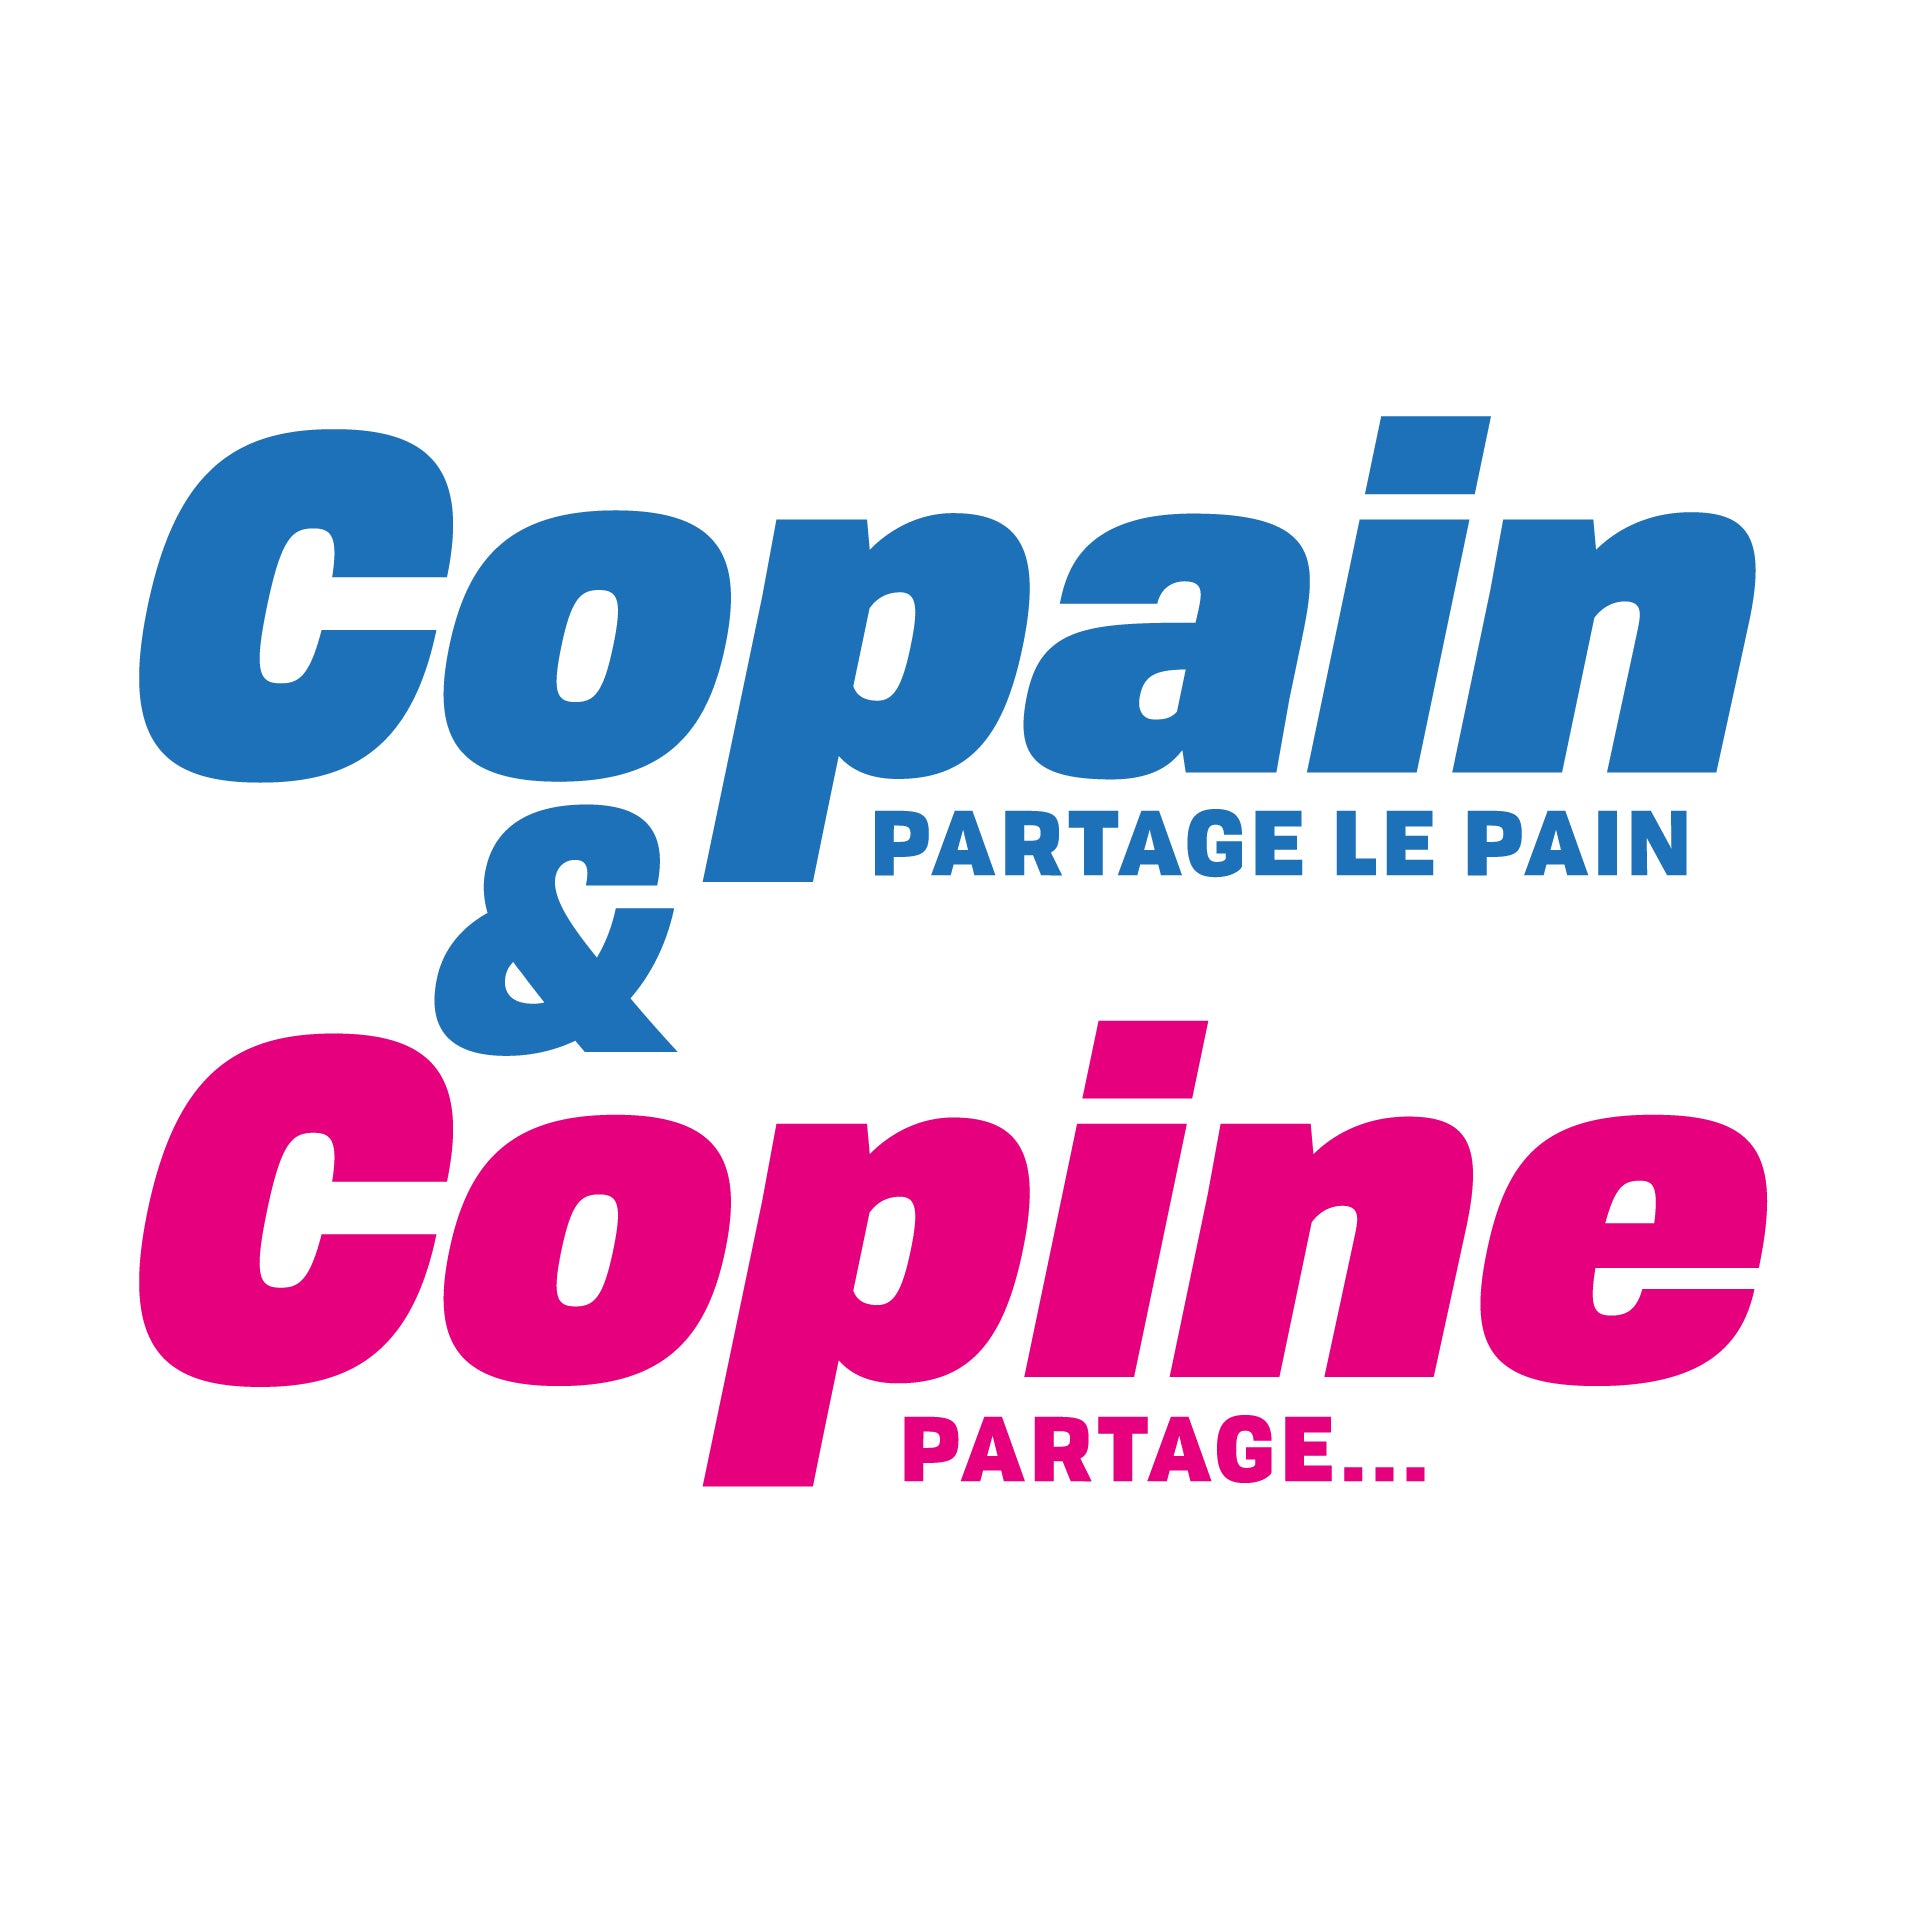 Copain & Copine